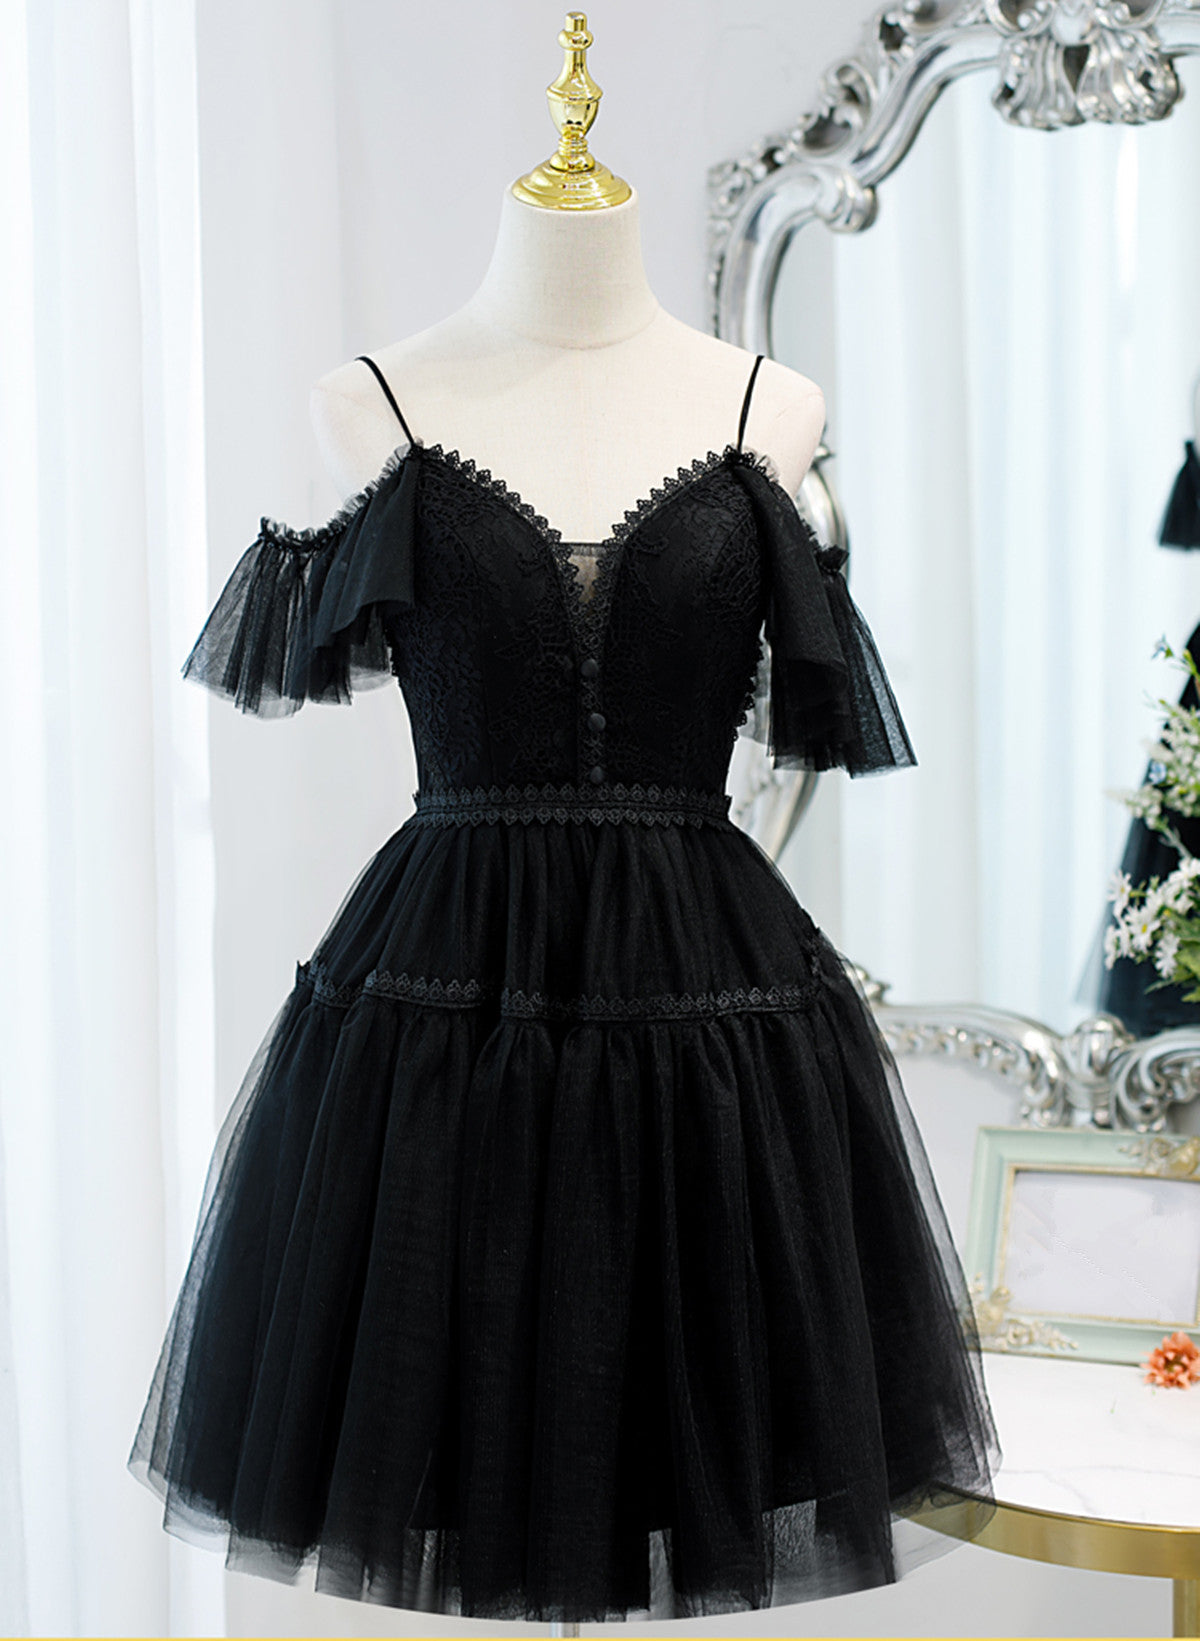 Black Sweetheart Straps Tulle Homecoming Dress, Black Off Shoulder Prom Dress